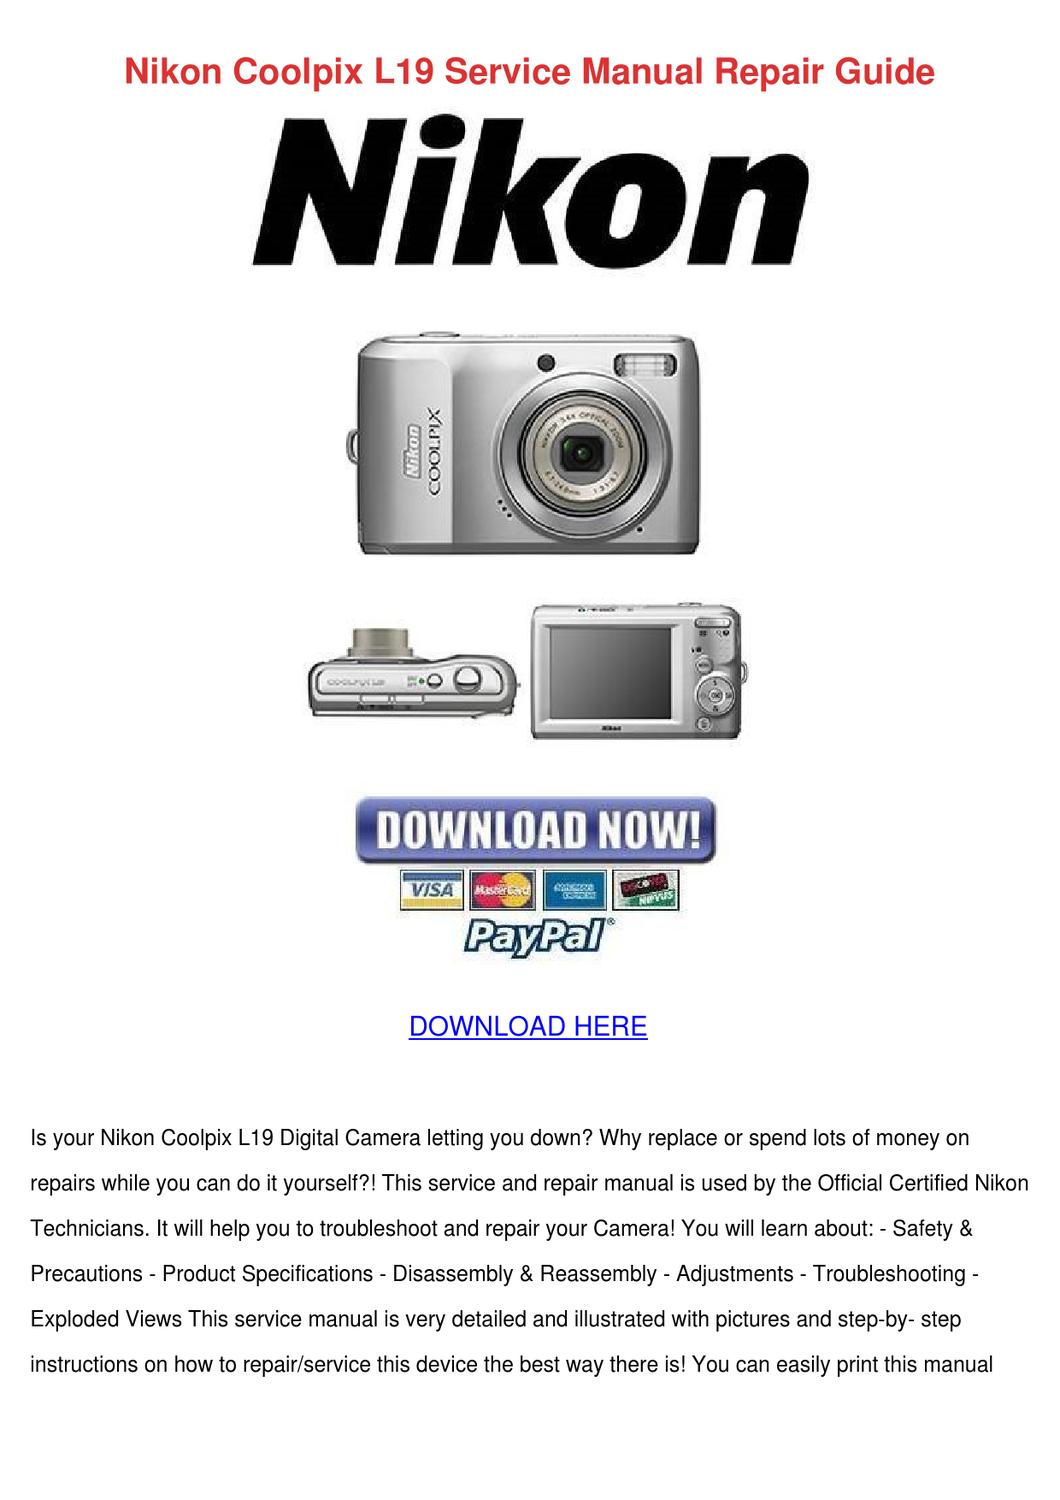 Nikon camera manuals free download